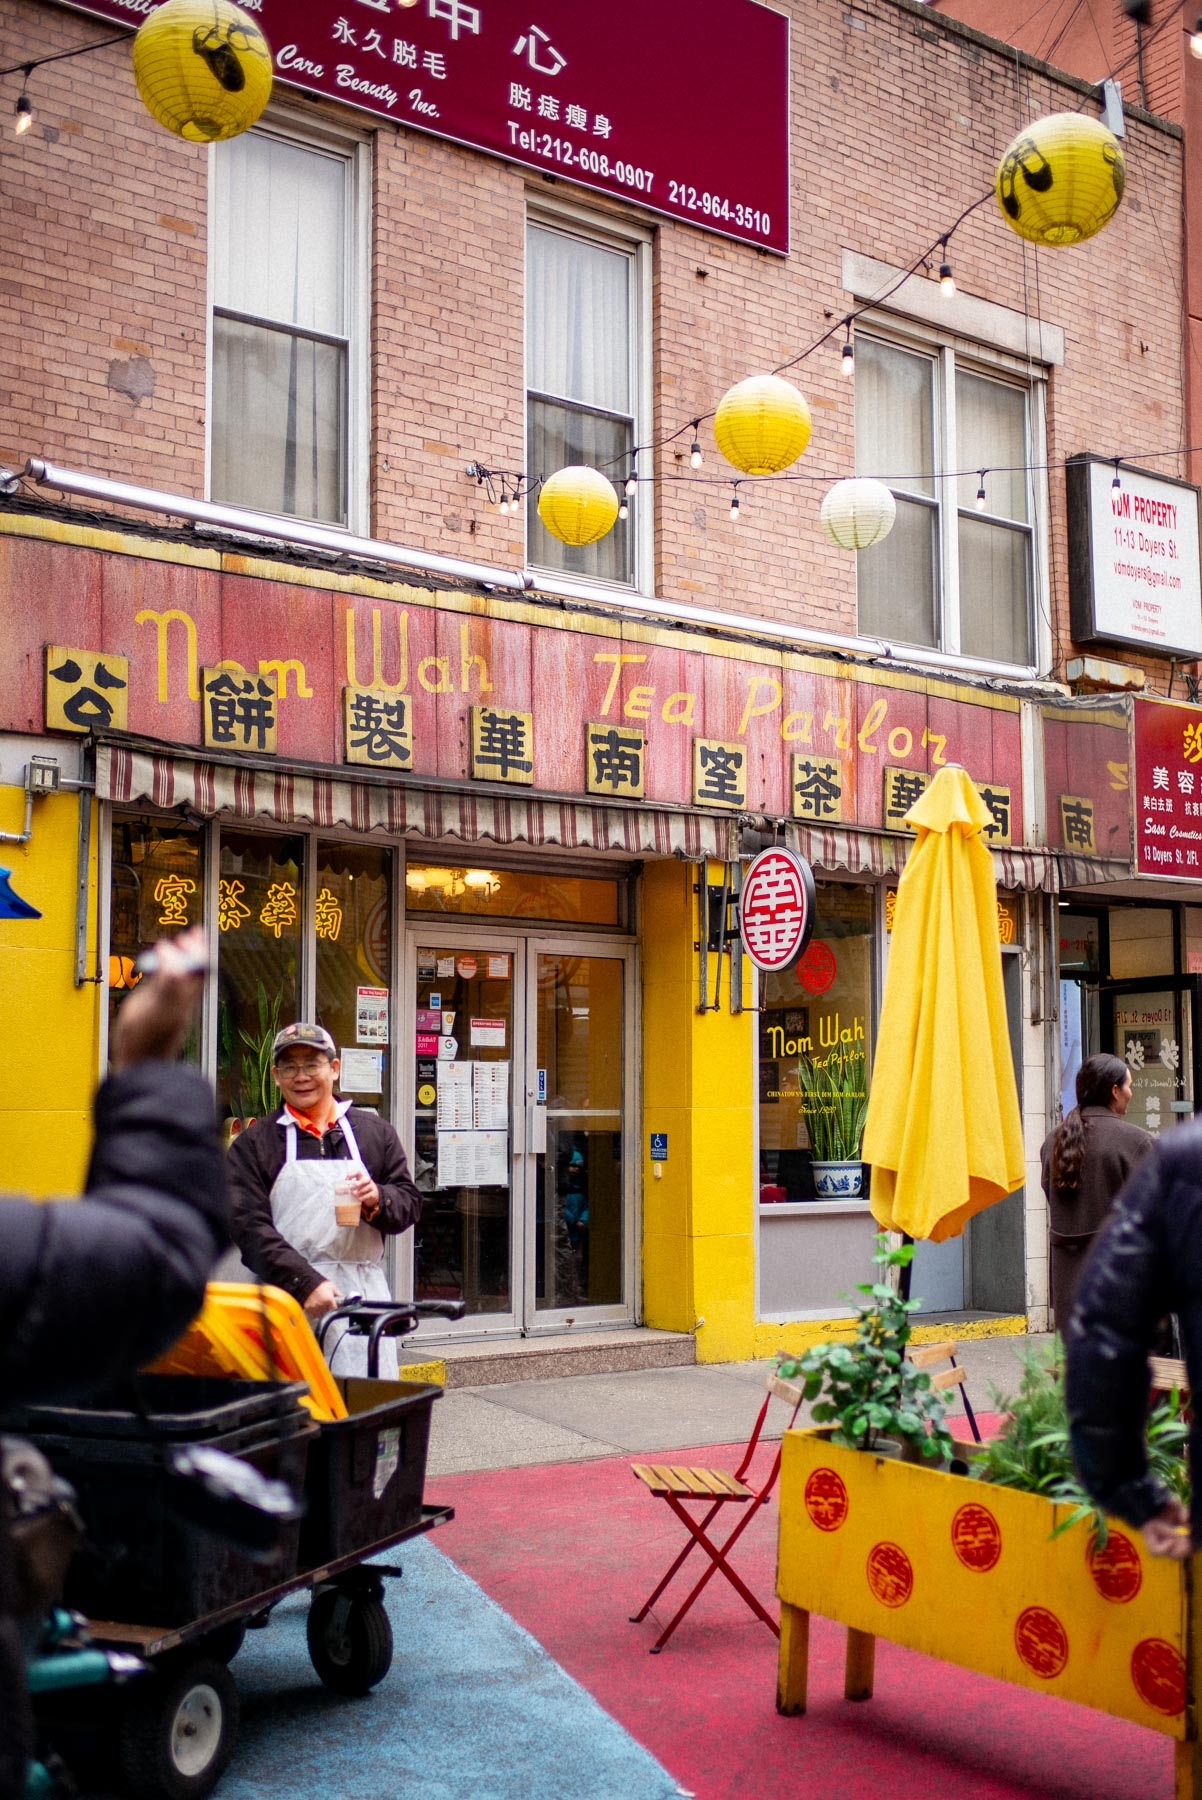 Nom Wah Tea Parlor, famous dim sum restaurant in Chinatown